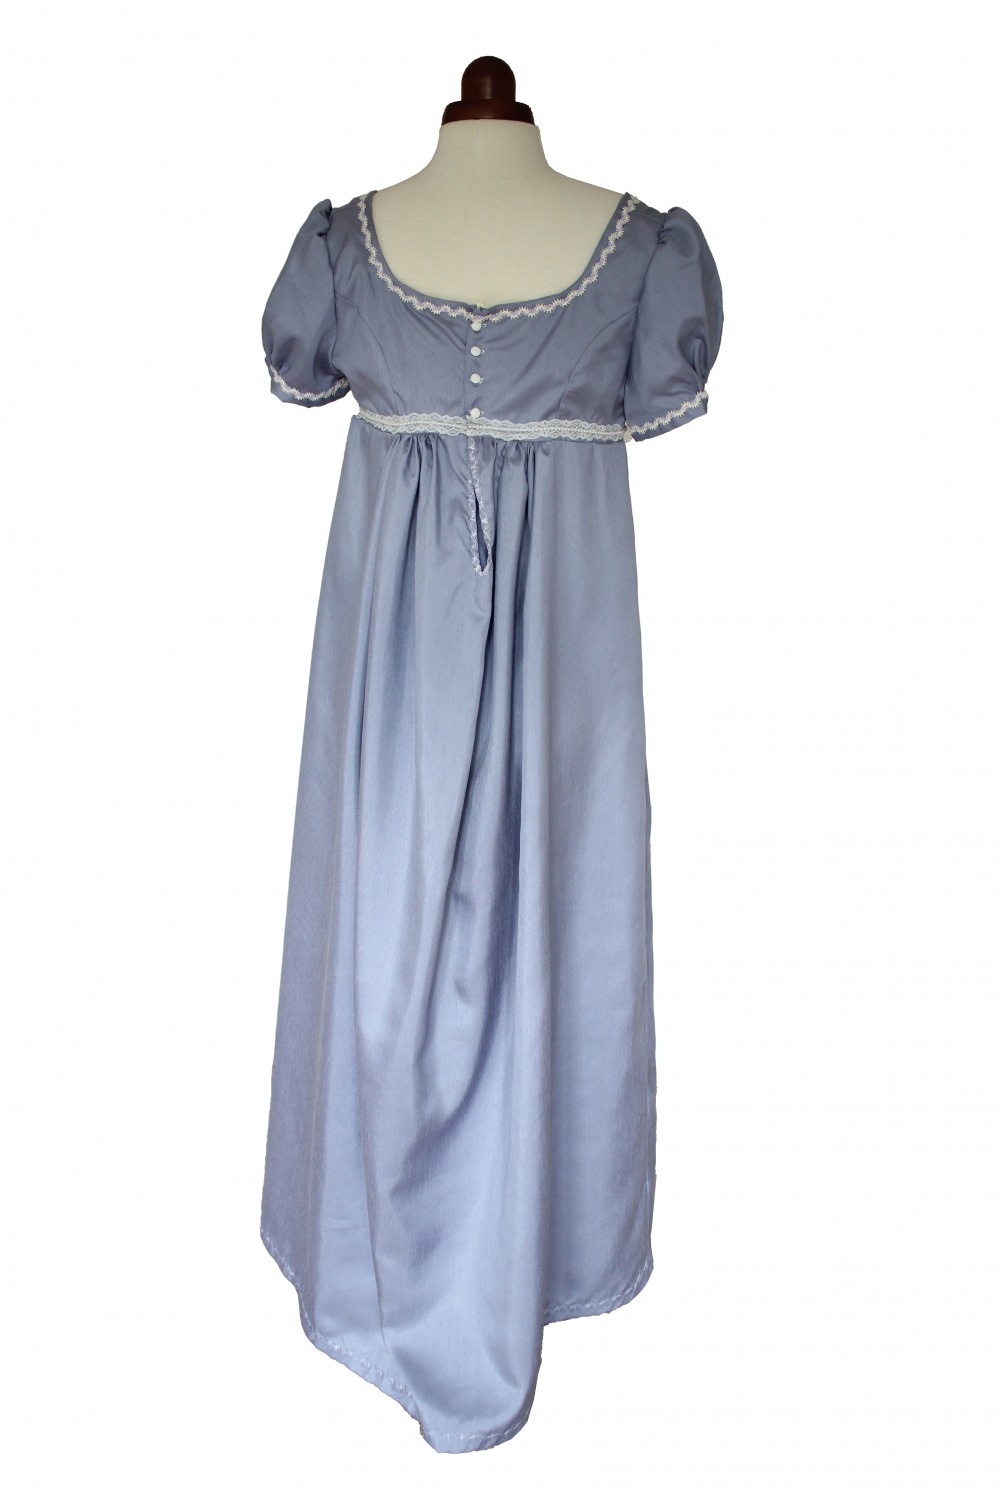 Ladies 19th Century Jane Austen Regency Evening Ball Gown Size 12 Image